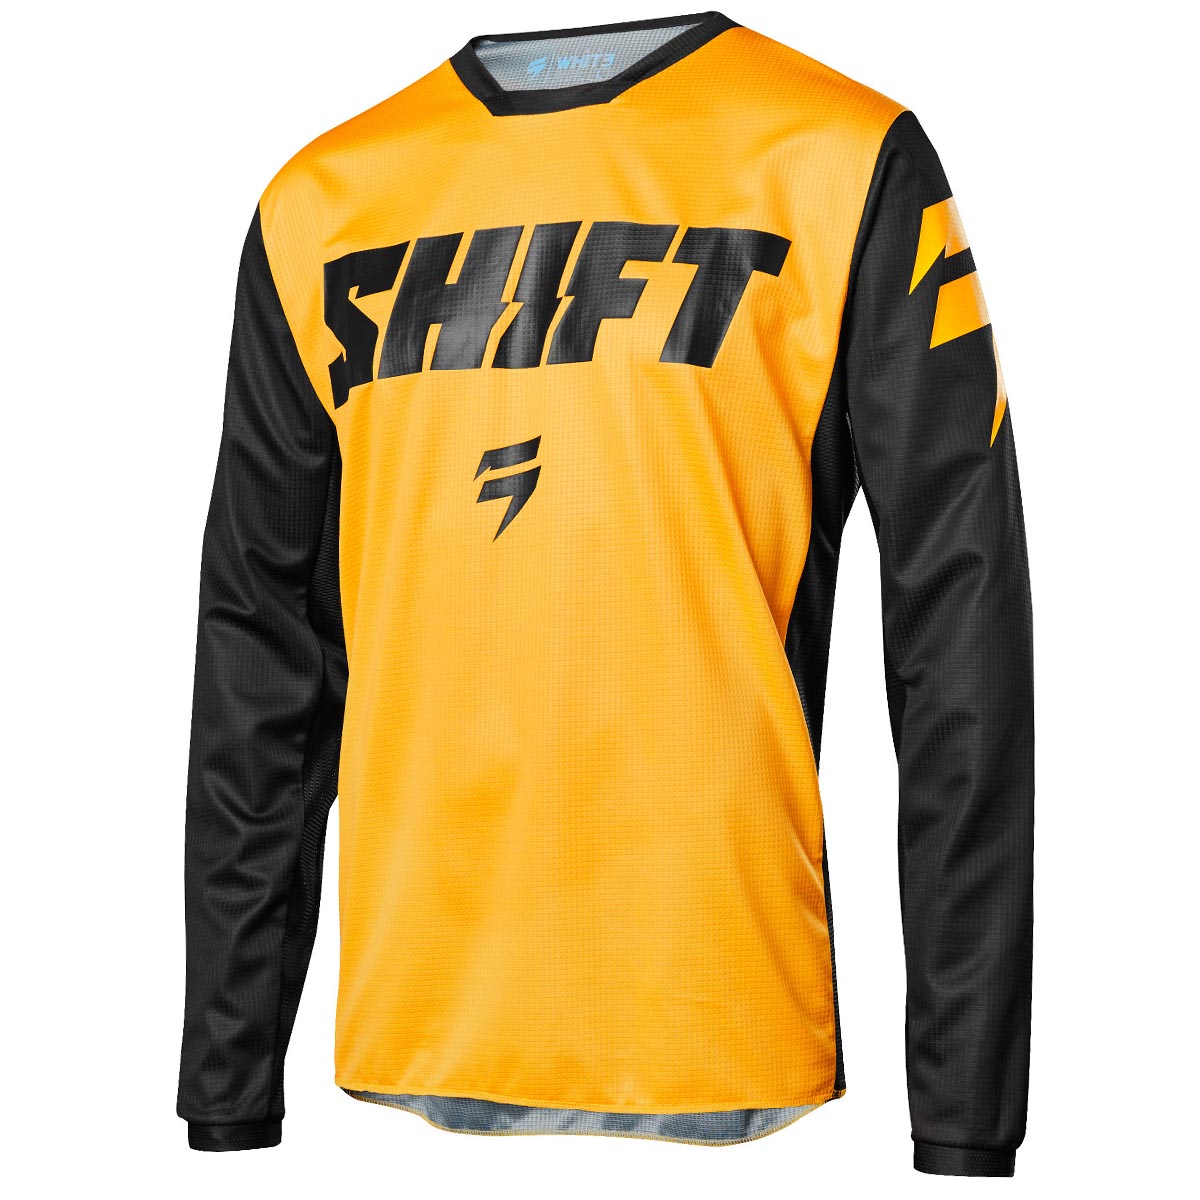 Shift Jersey Whit3 Label Ninety Seven - Yellow